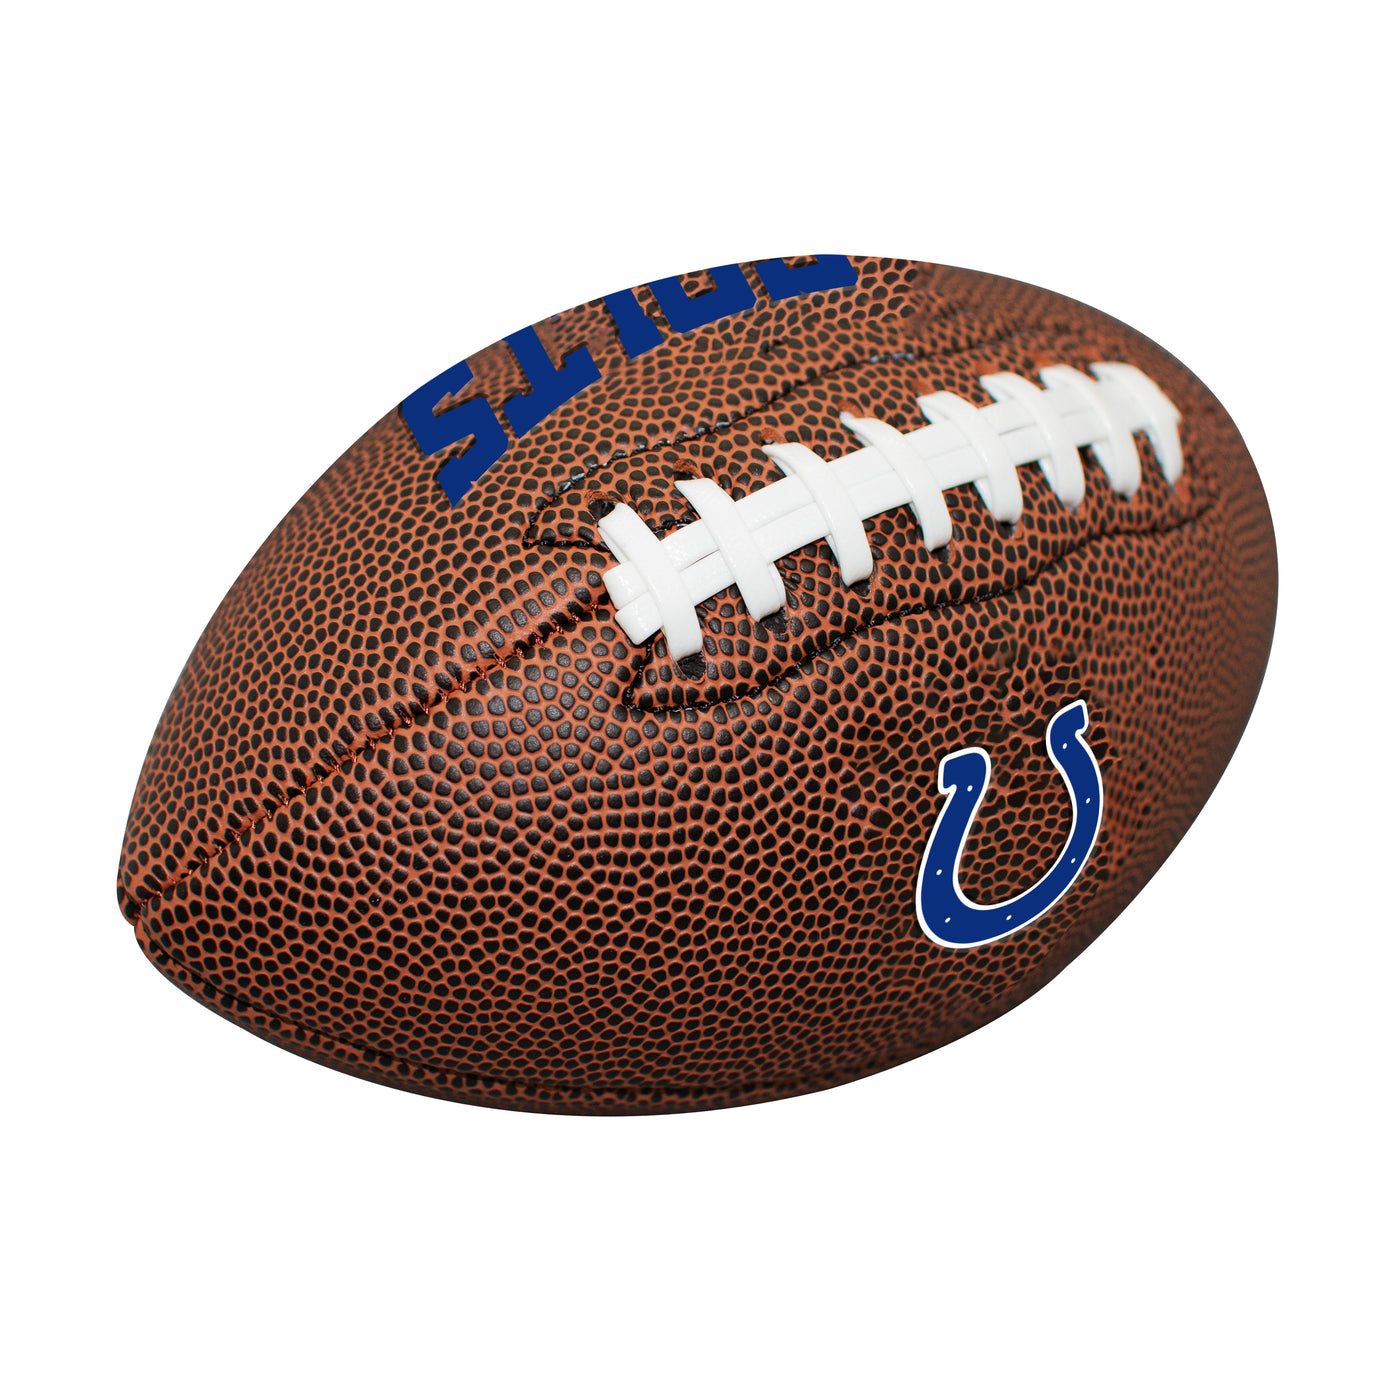 Indianapolis Colts Mini Size Composite Football